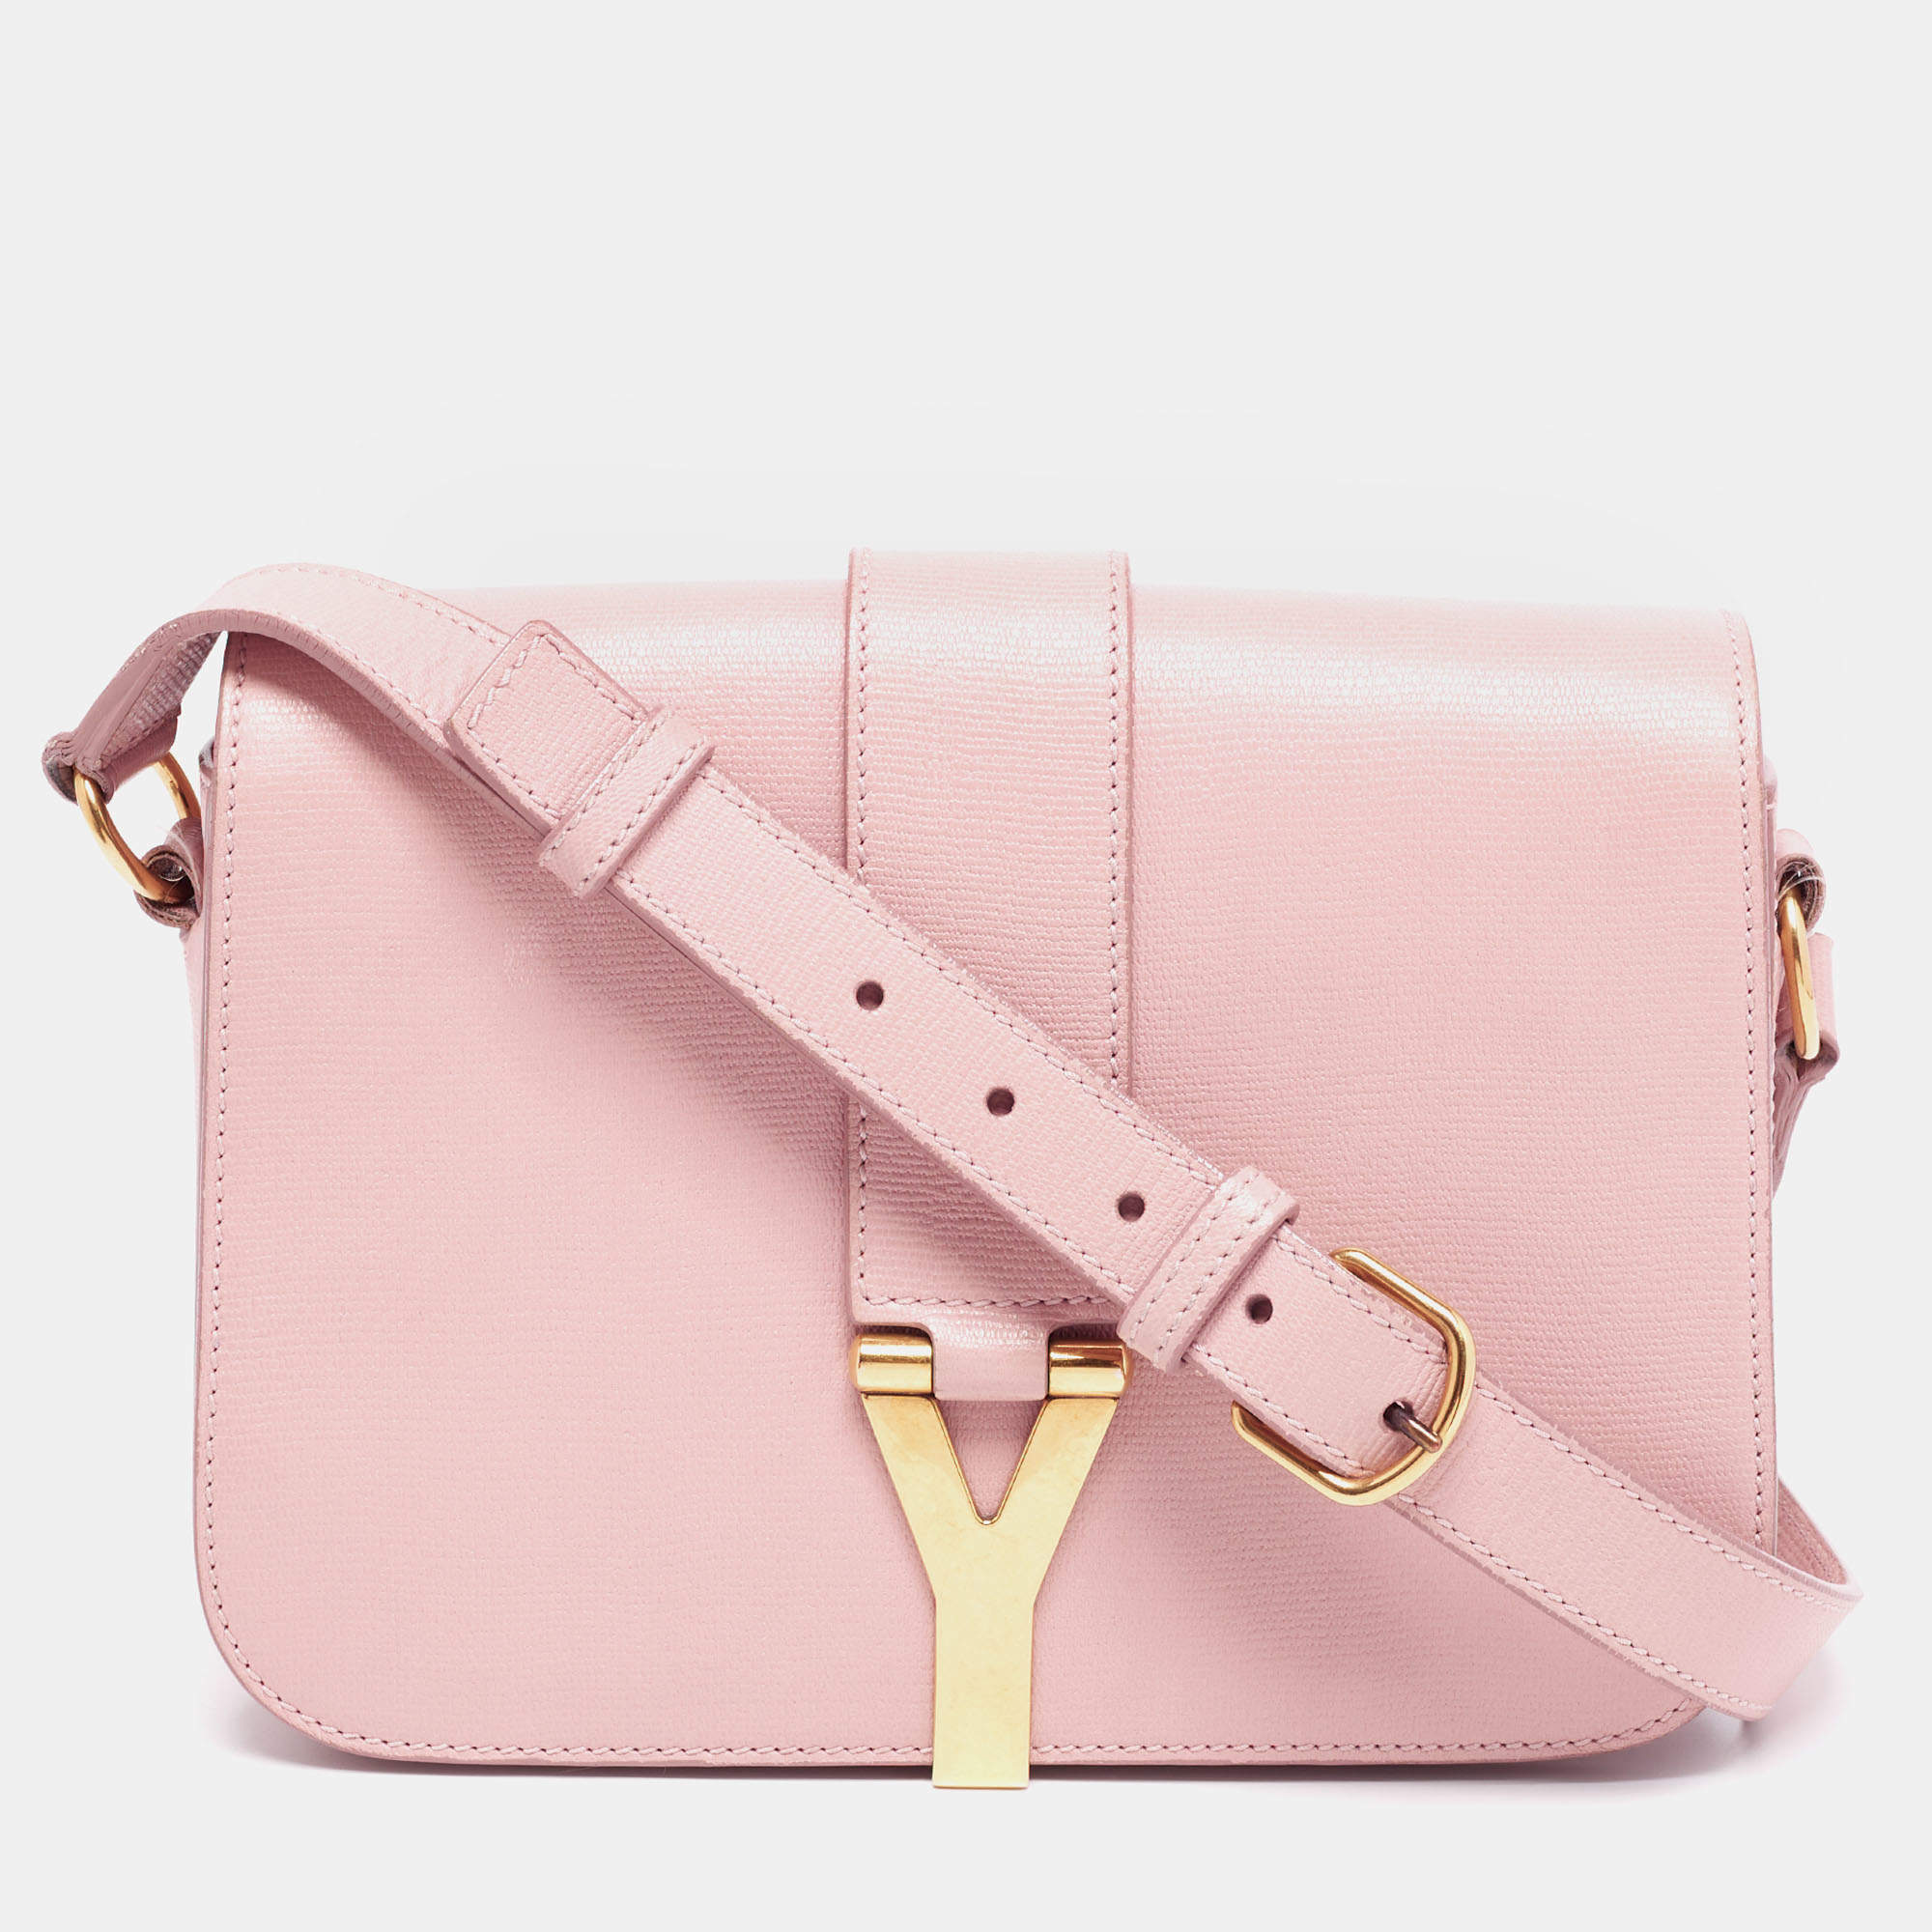 Yves Saint Laurent Pink Leather Medium Chyc Flap Bag